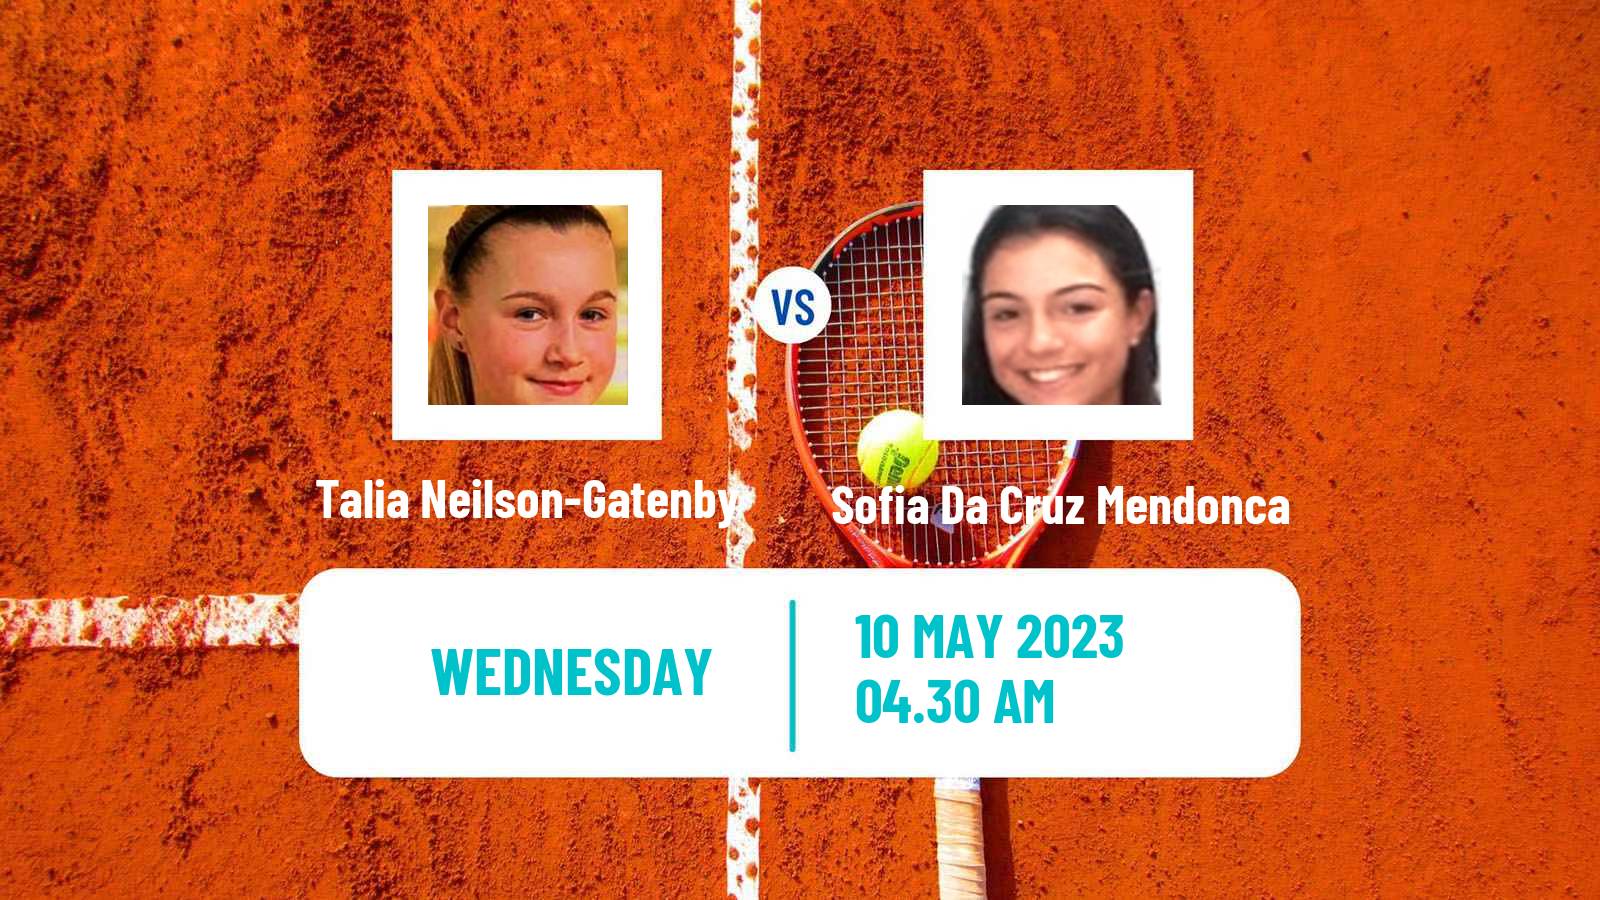 Tennis ITF Tournaments Talia Neilson-Gatenby - Sofia Da Cruz Mendonca